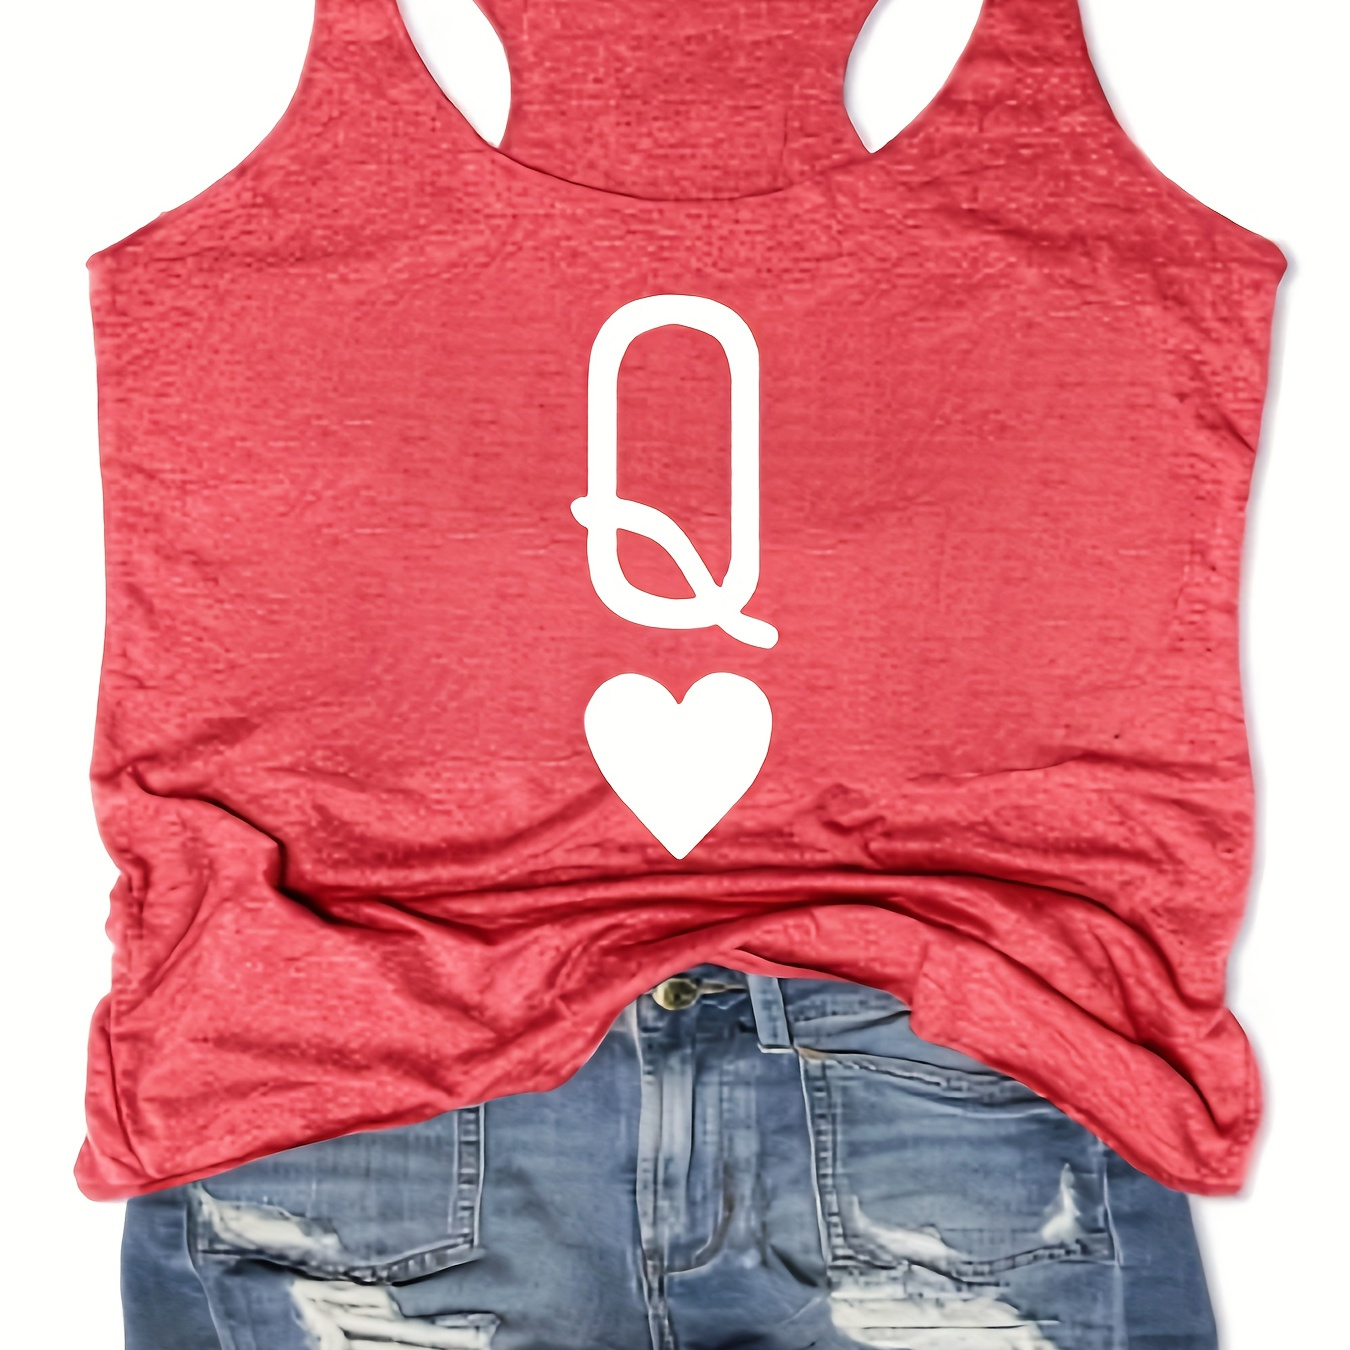 

Poker Q Heart Print Racerback Sports Tank Top, Sleeveless Running Vest Top, Women's Activewear